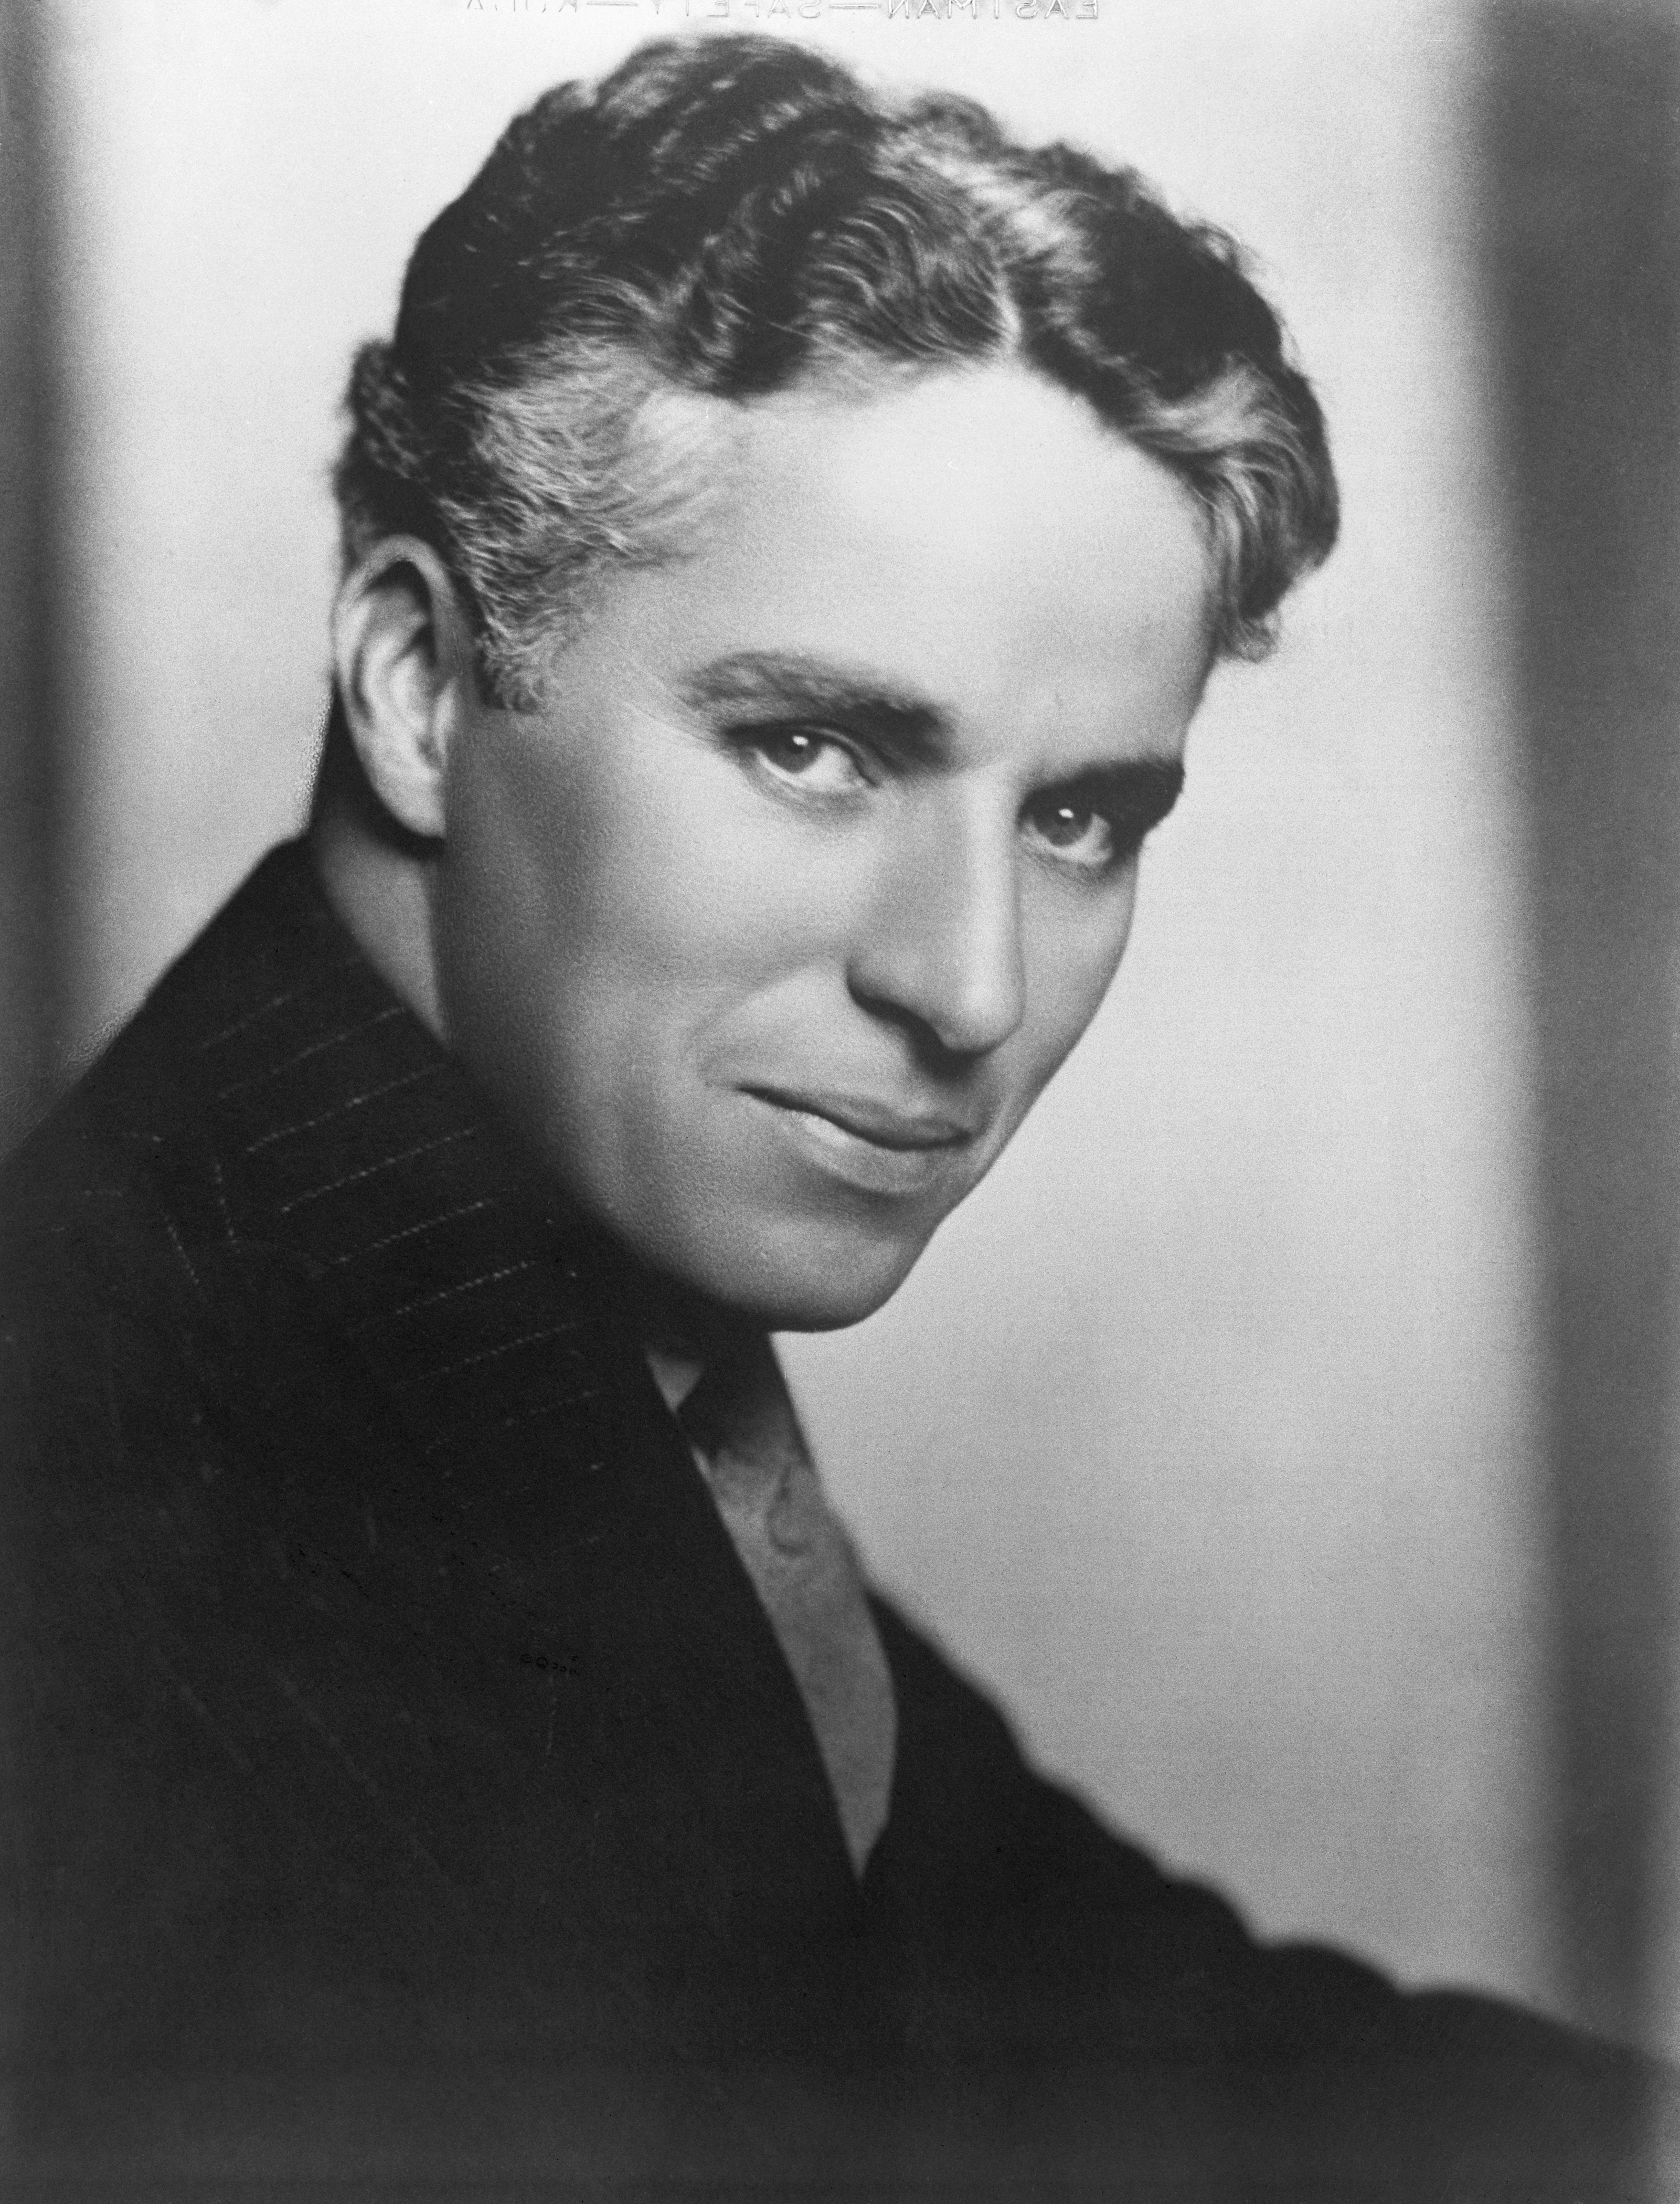 Retrato del cineasta inglés Charlie Chaplin. | Foto: Getty Images